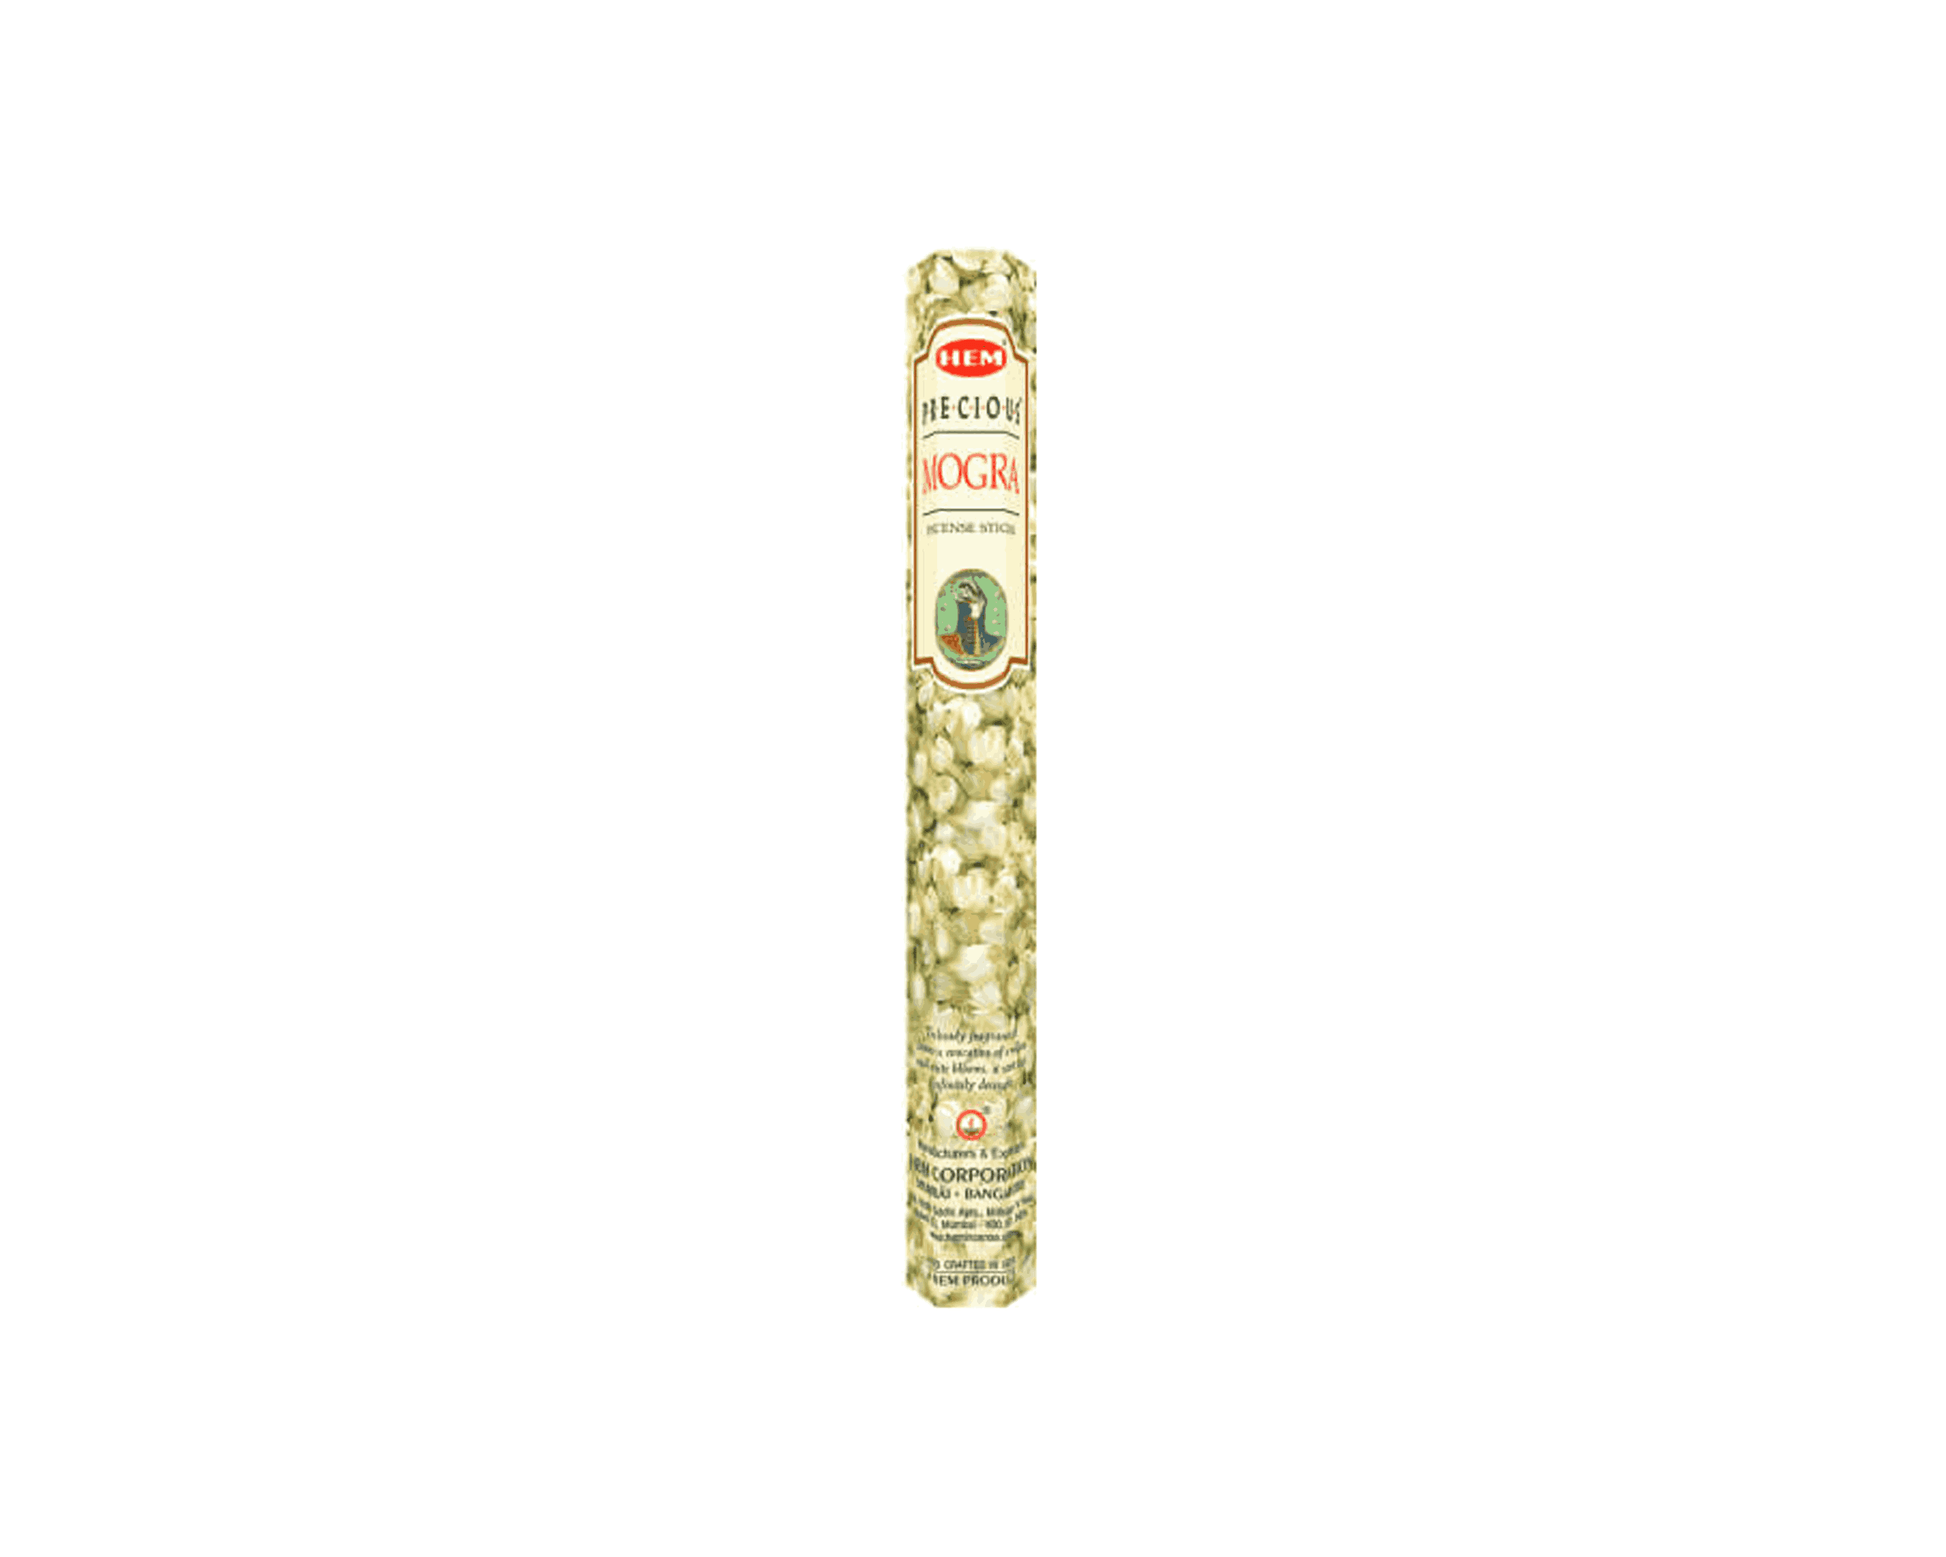 HEM incense stick 20 stick Pack - Indian Spices